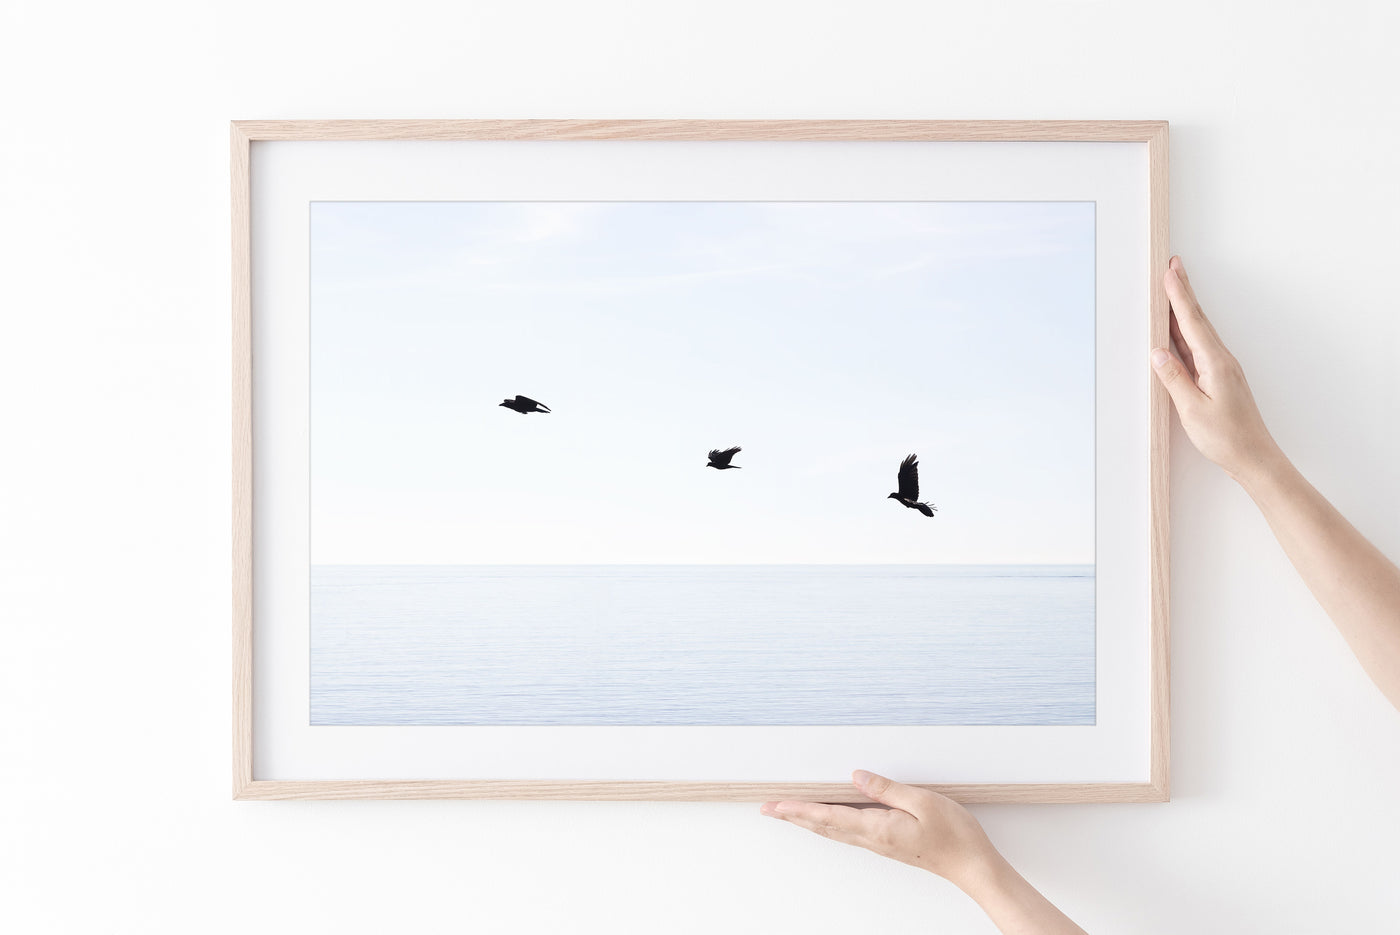 Three birds in flight - Wildlife photography art print by Cattie Coyle